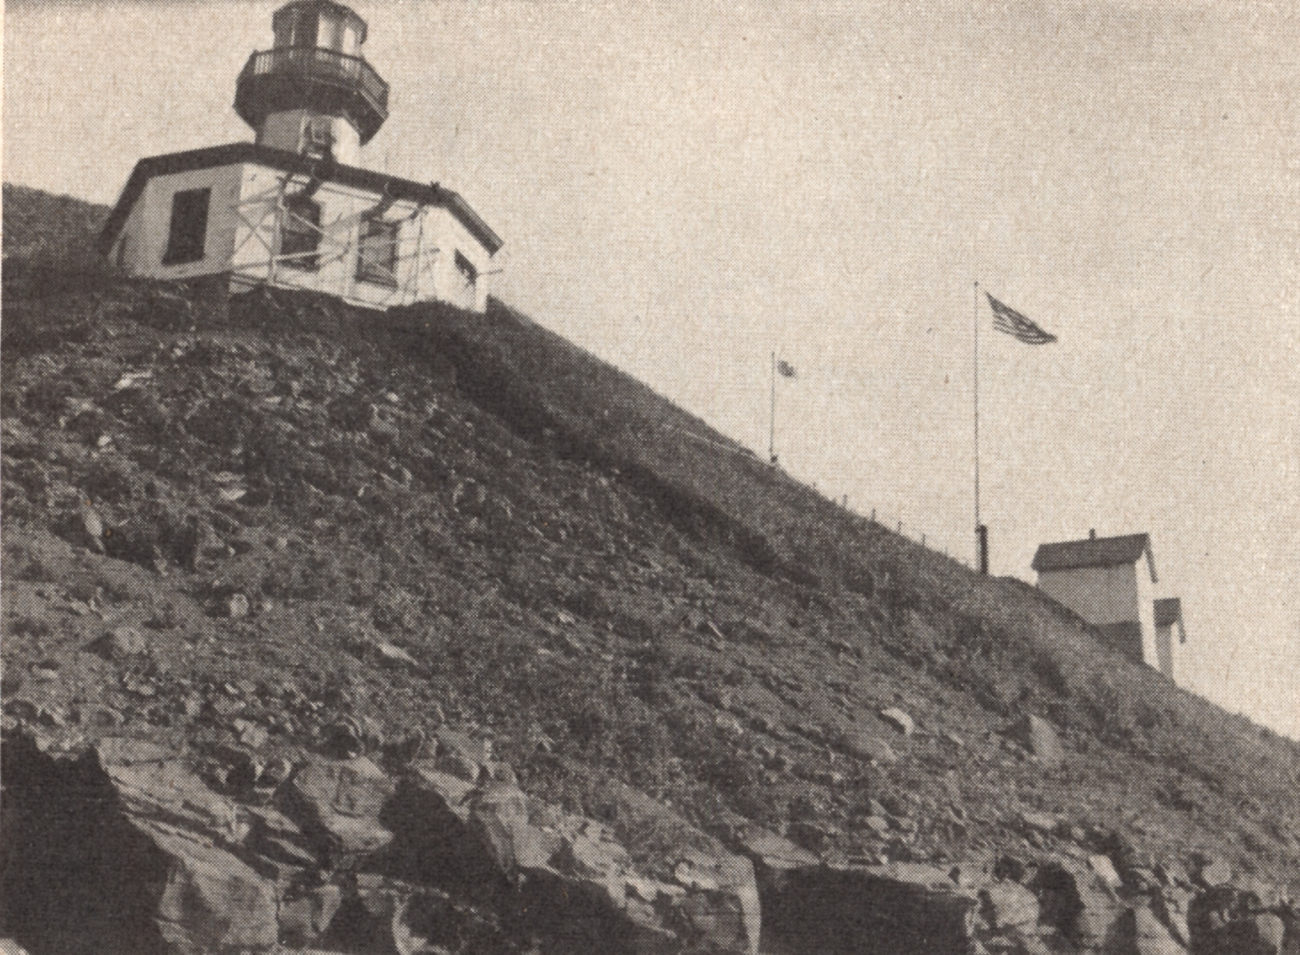 Cape Sarichef Lighthouse